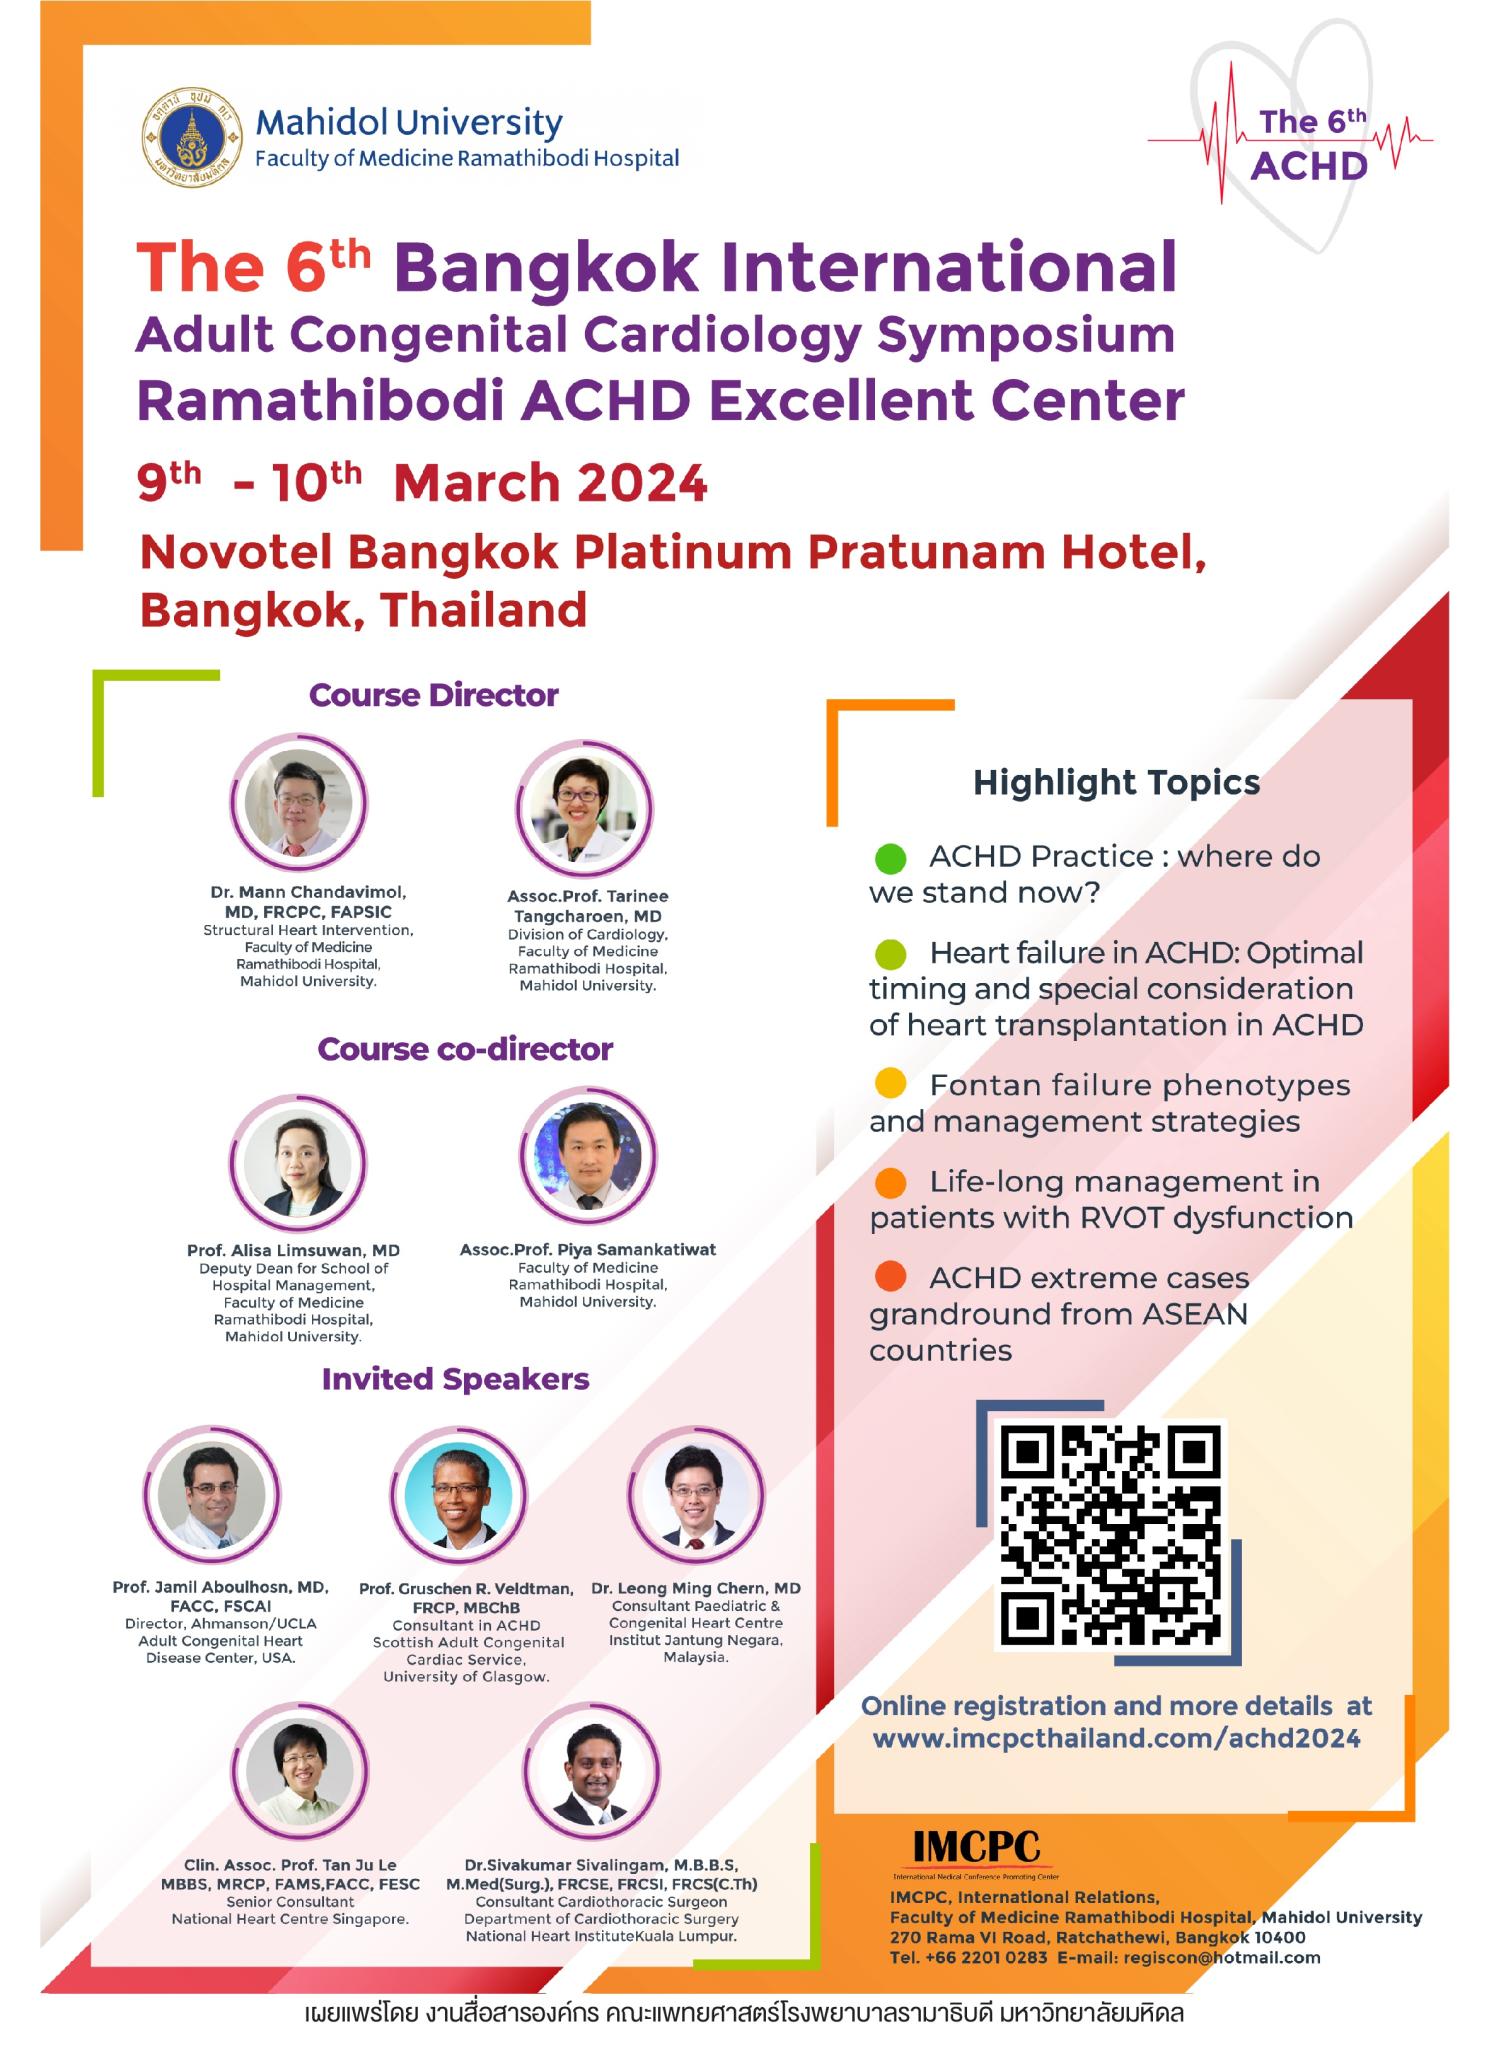 The 6th Bangkok International Adult Congenital Cardiology Symposium Ramathibodi ACHD Excellent Center